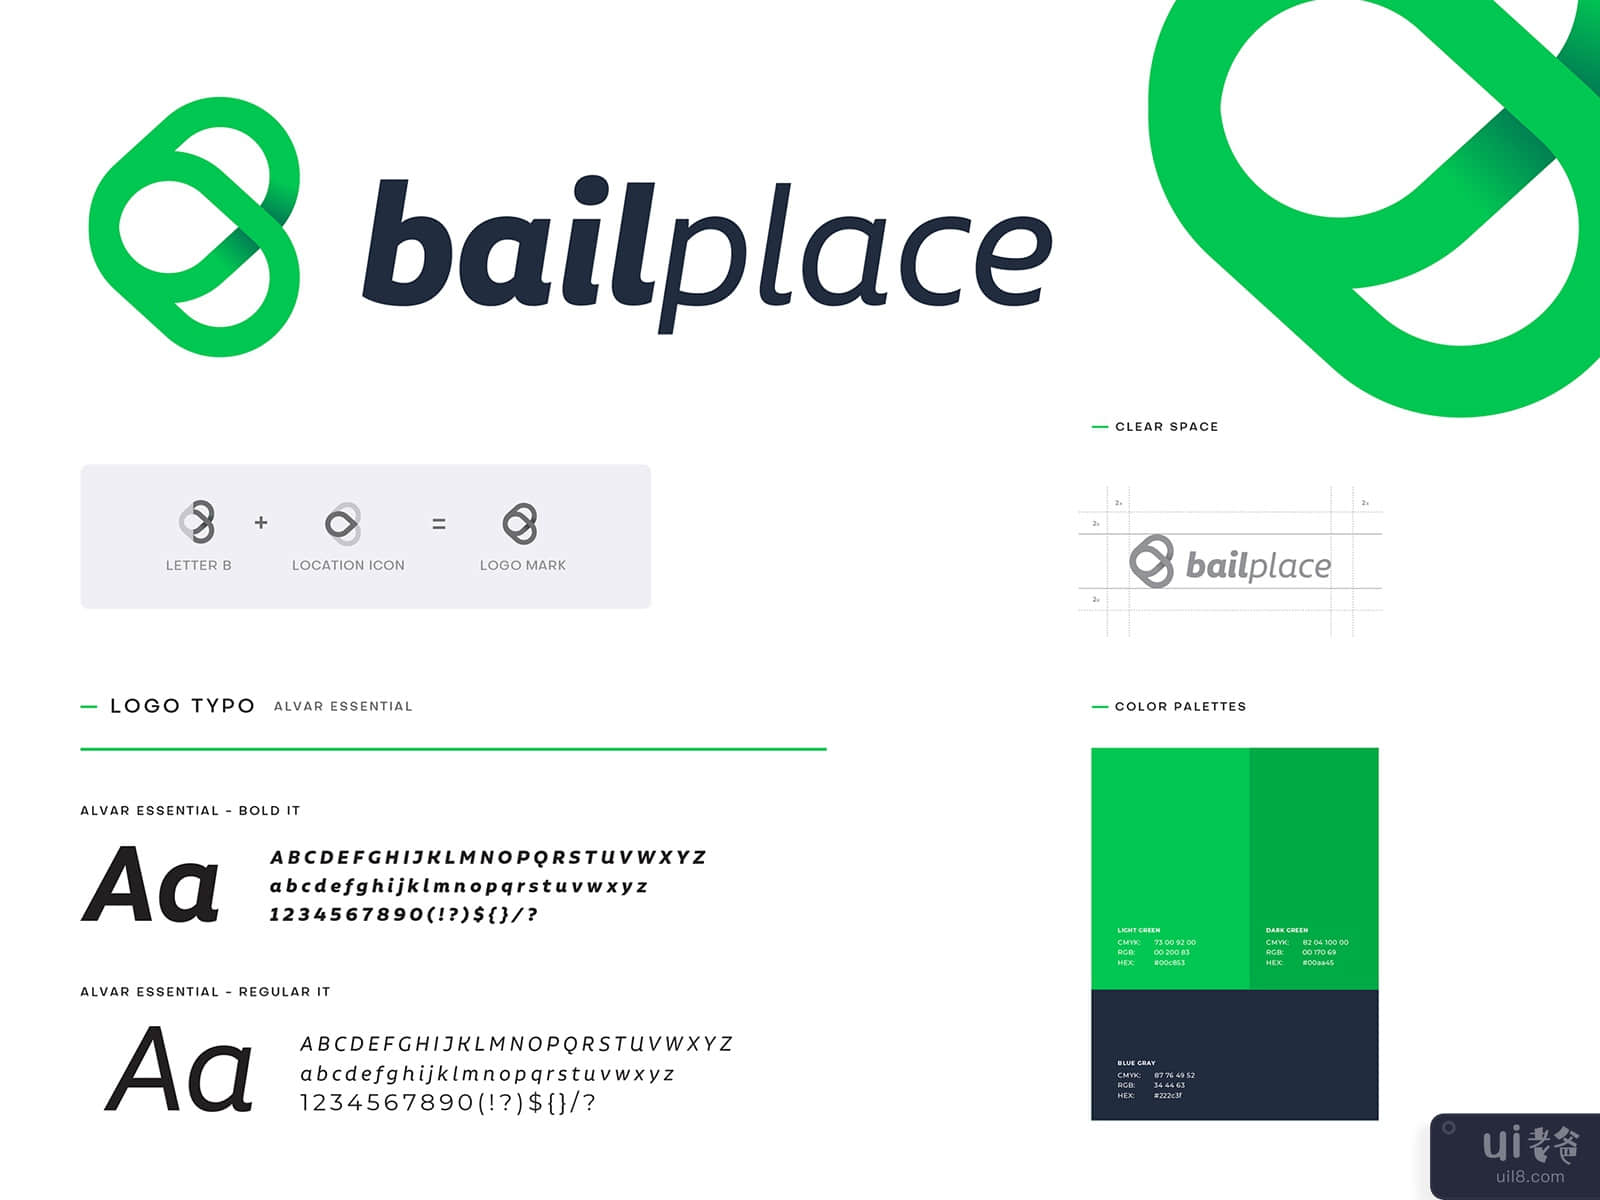 bailplace - brand identity